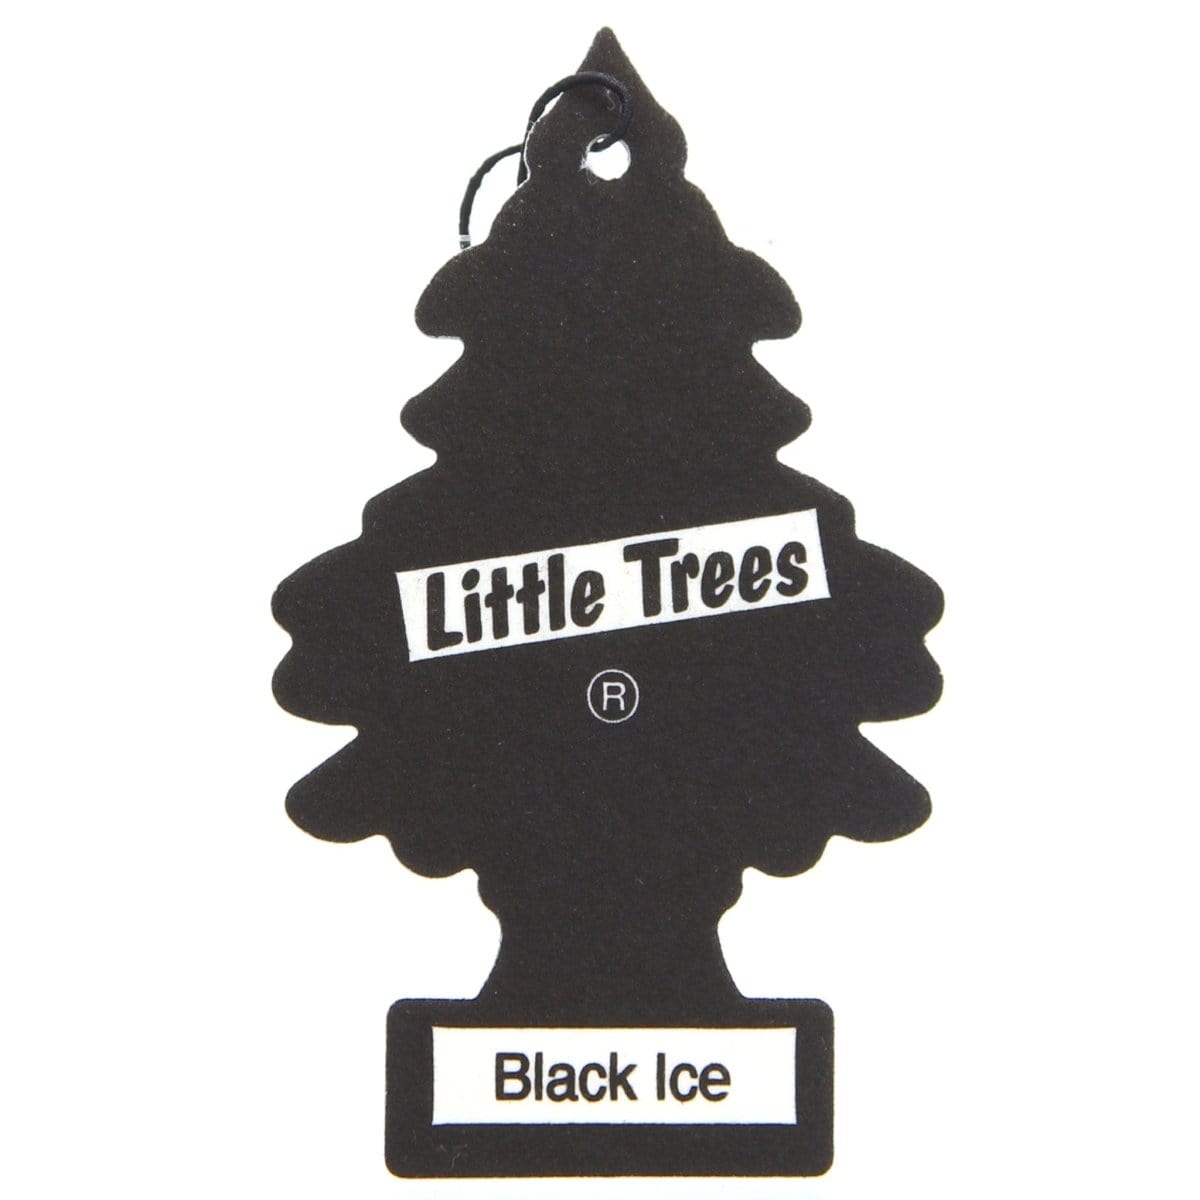 Kleenrite Accessory Black Ice Little Trees Air Freshener